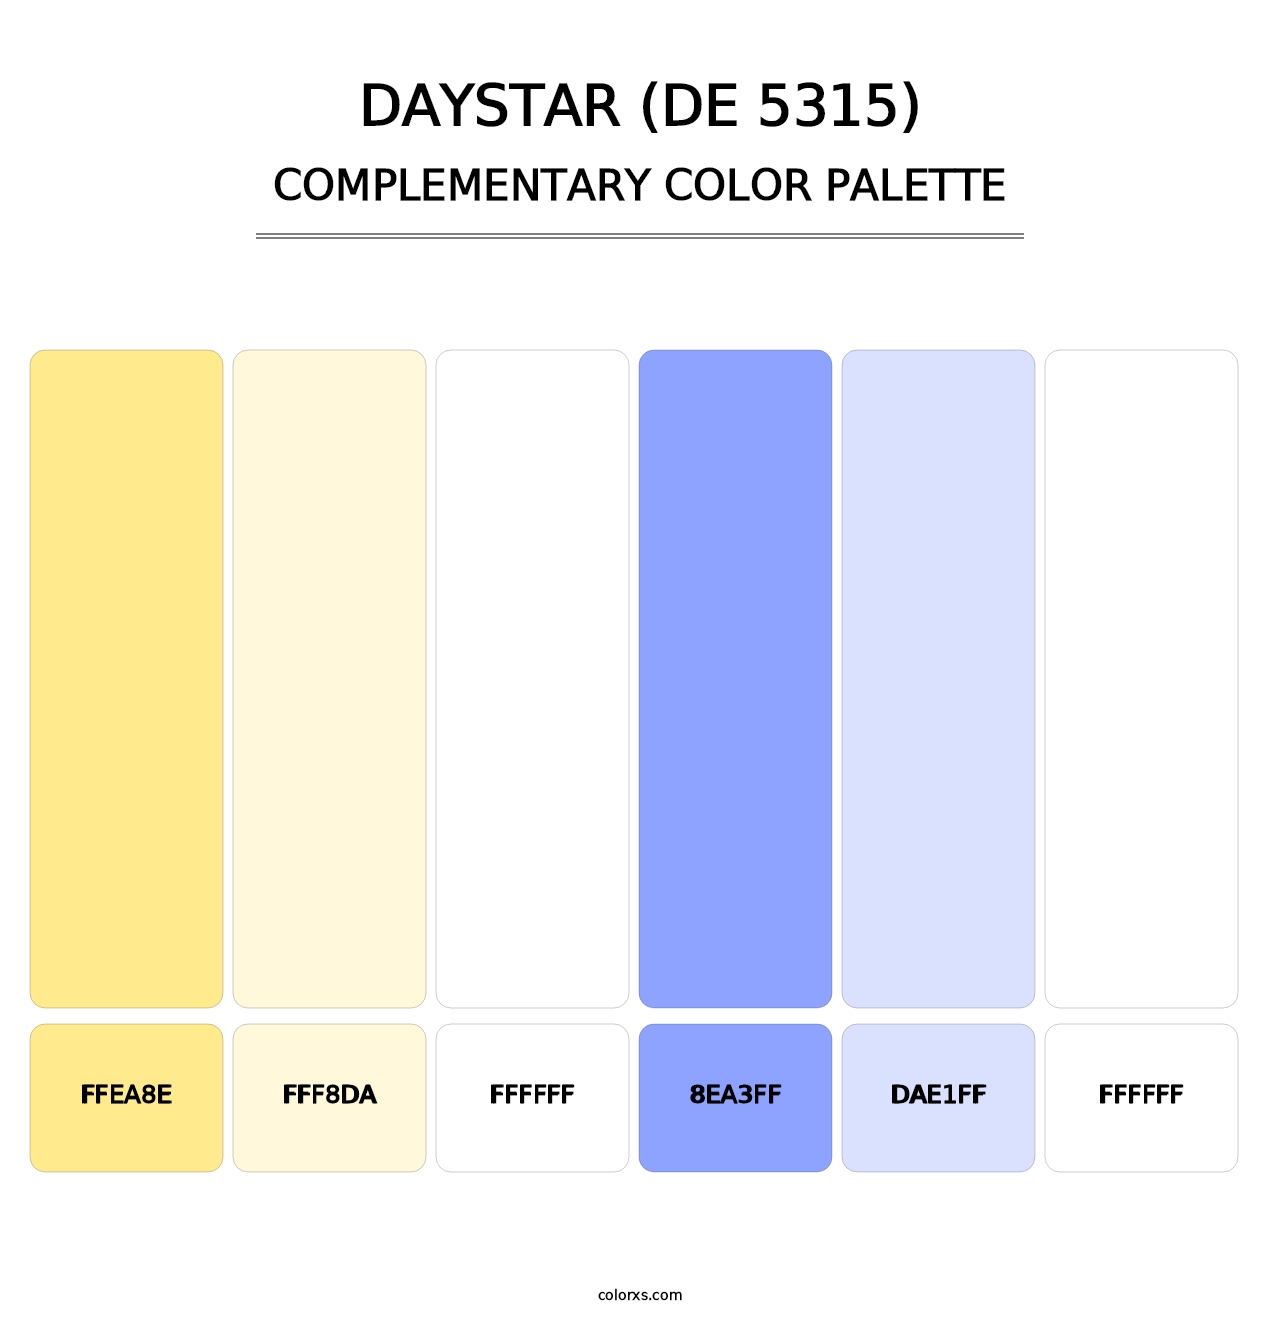 Daystar (DE 5315) - Complementary Color Palette